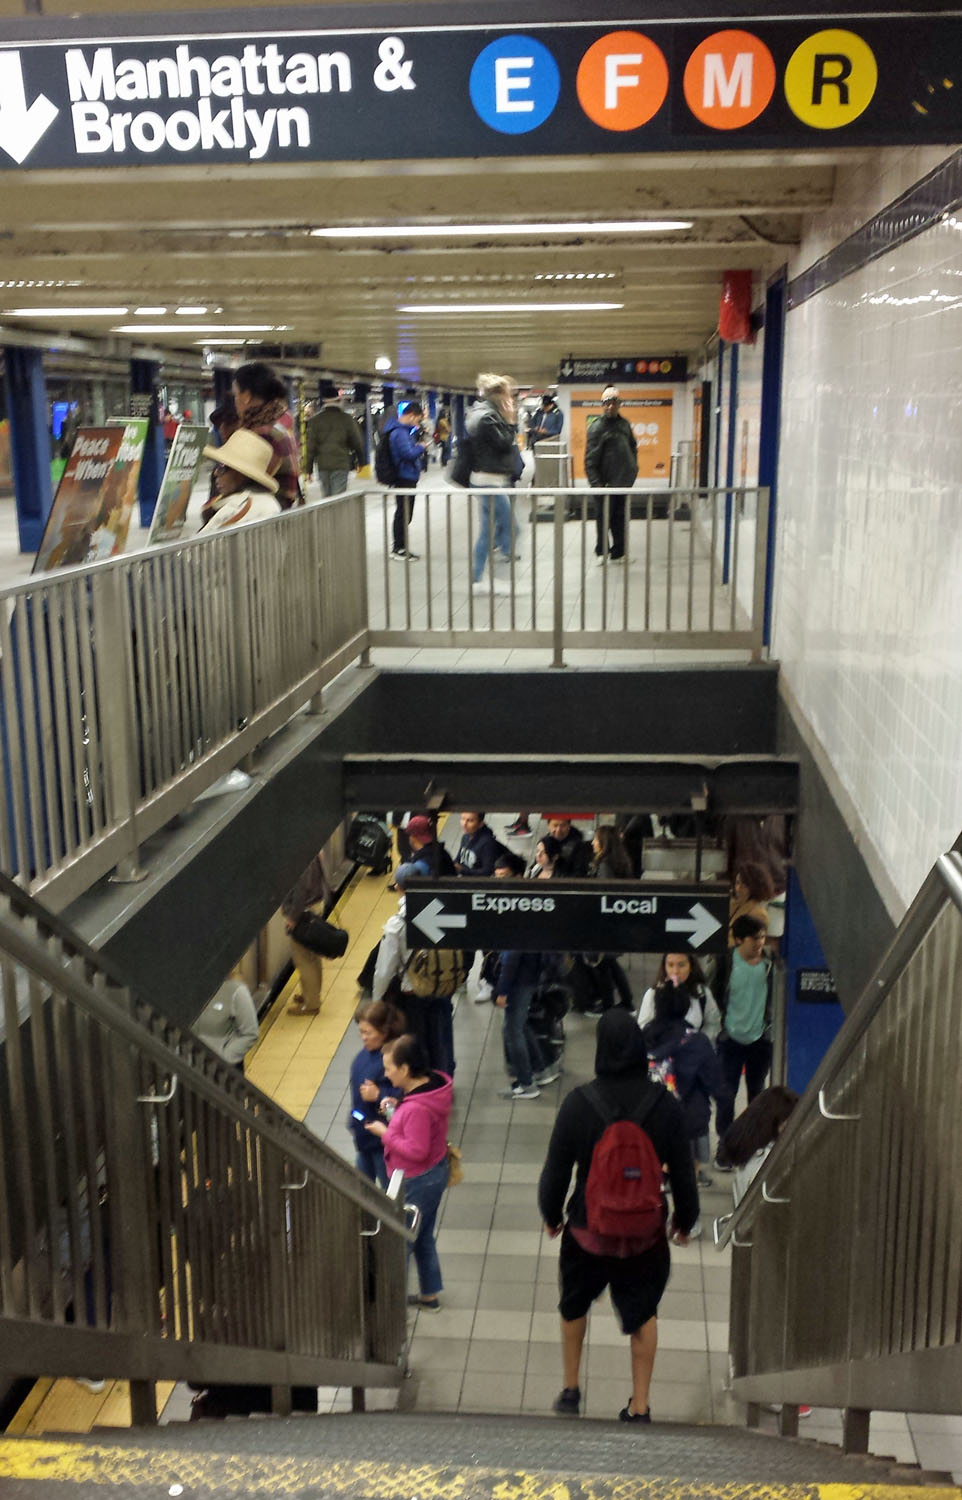 Roosevelt Av - Jackson Heights subway station stairs to Manhattan & Brooklyn EFMR